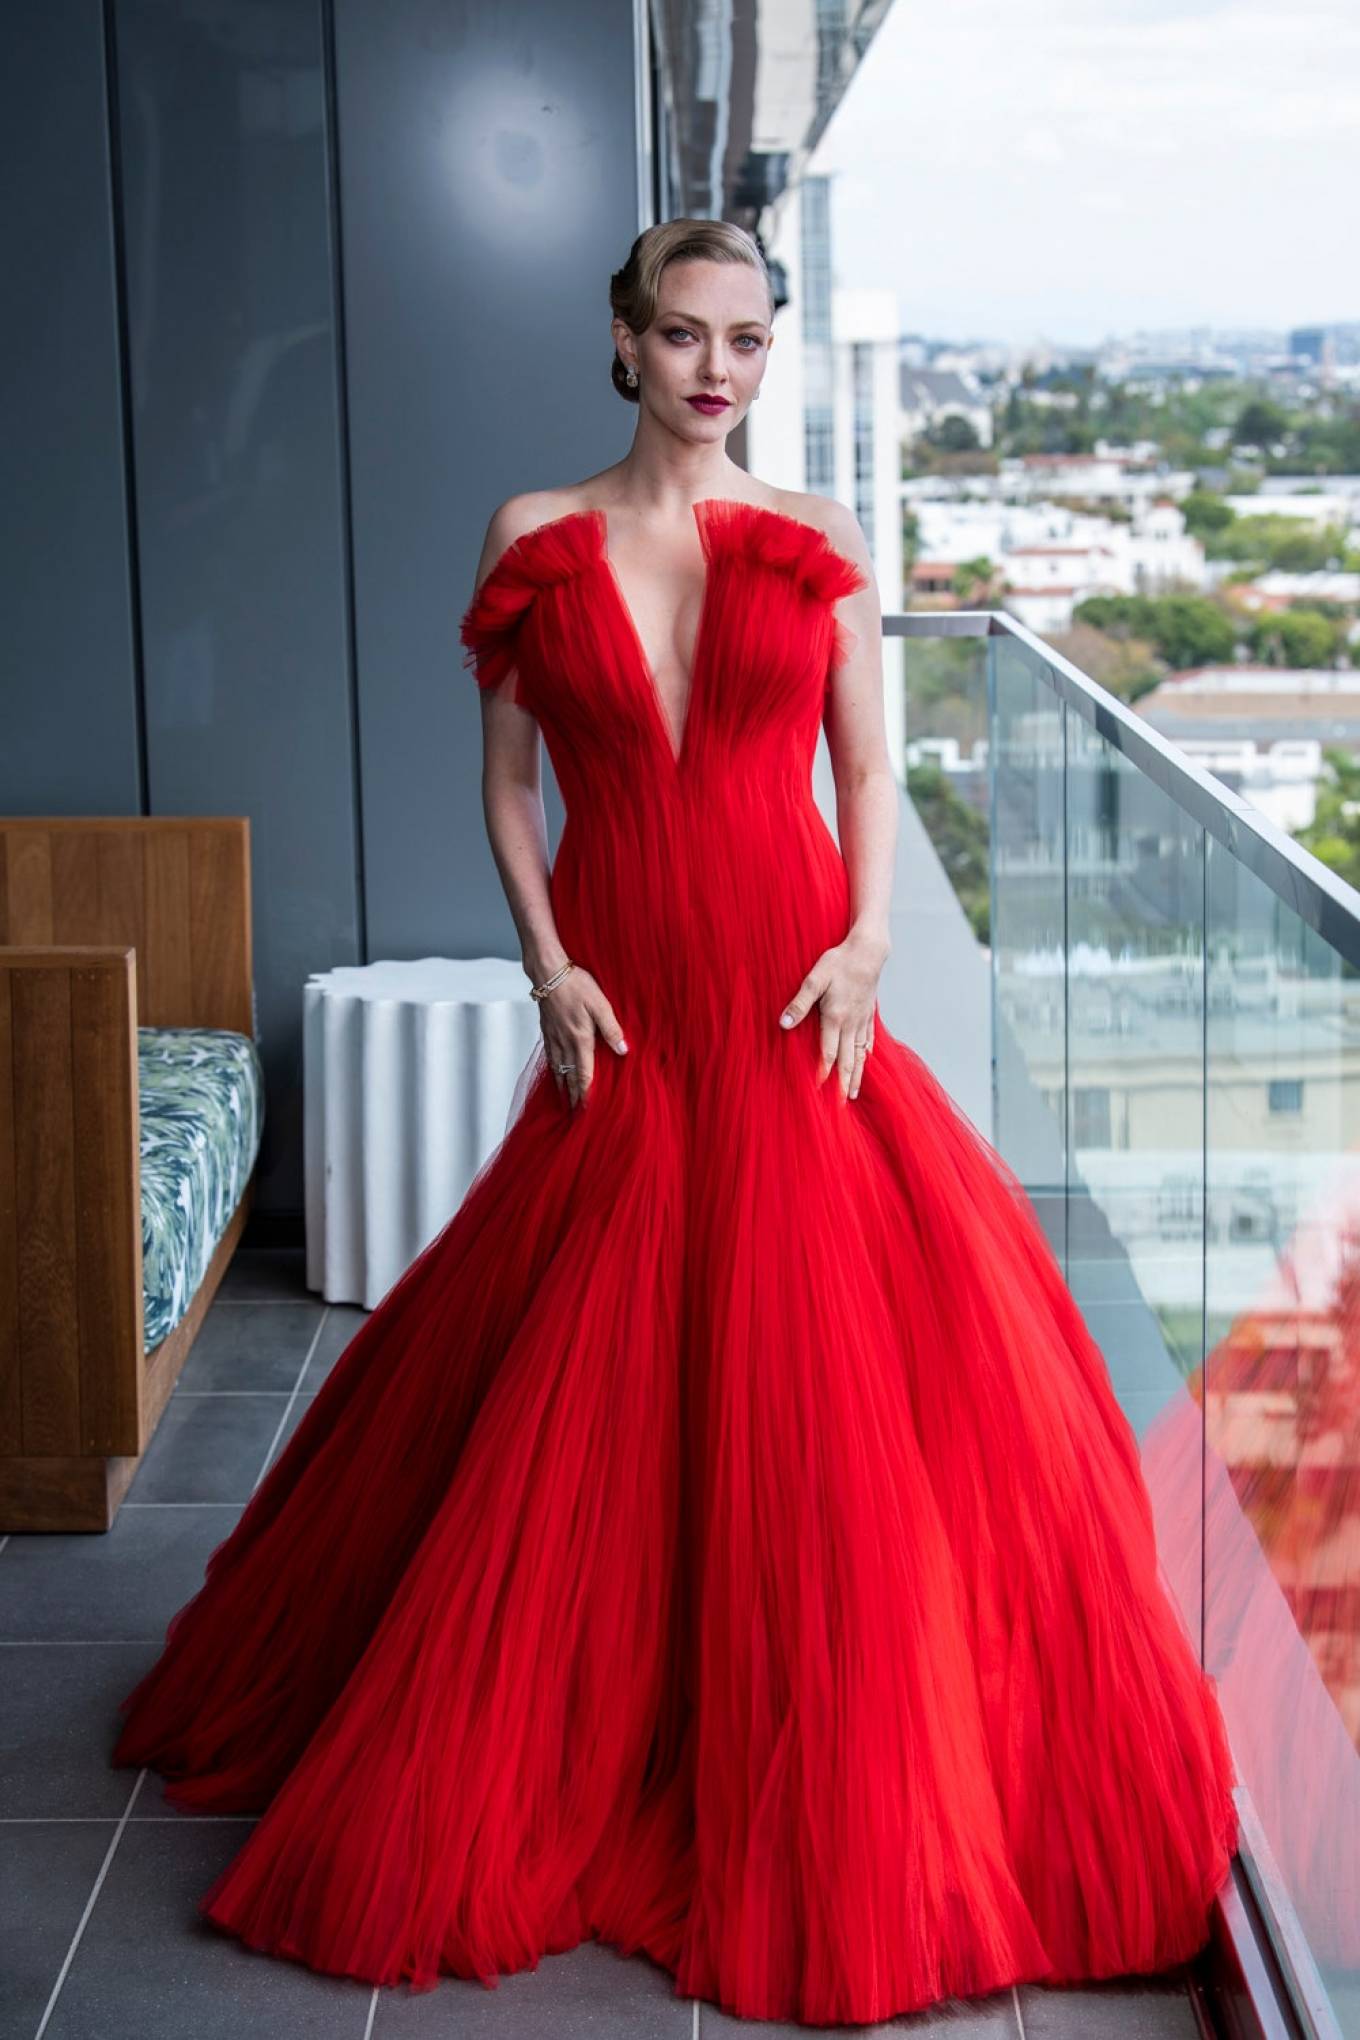 Amanda Seyfried 2021 : Amanda Seyfried – Oscars 2021 preparation for Vogue 2021-05